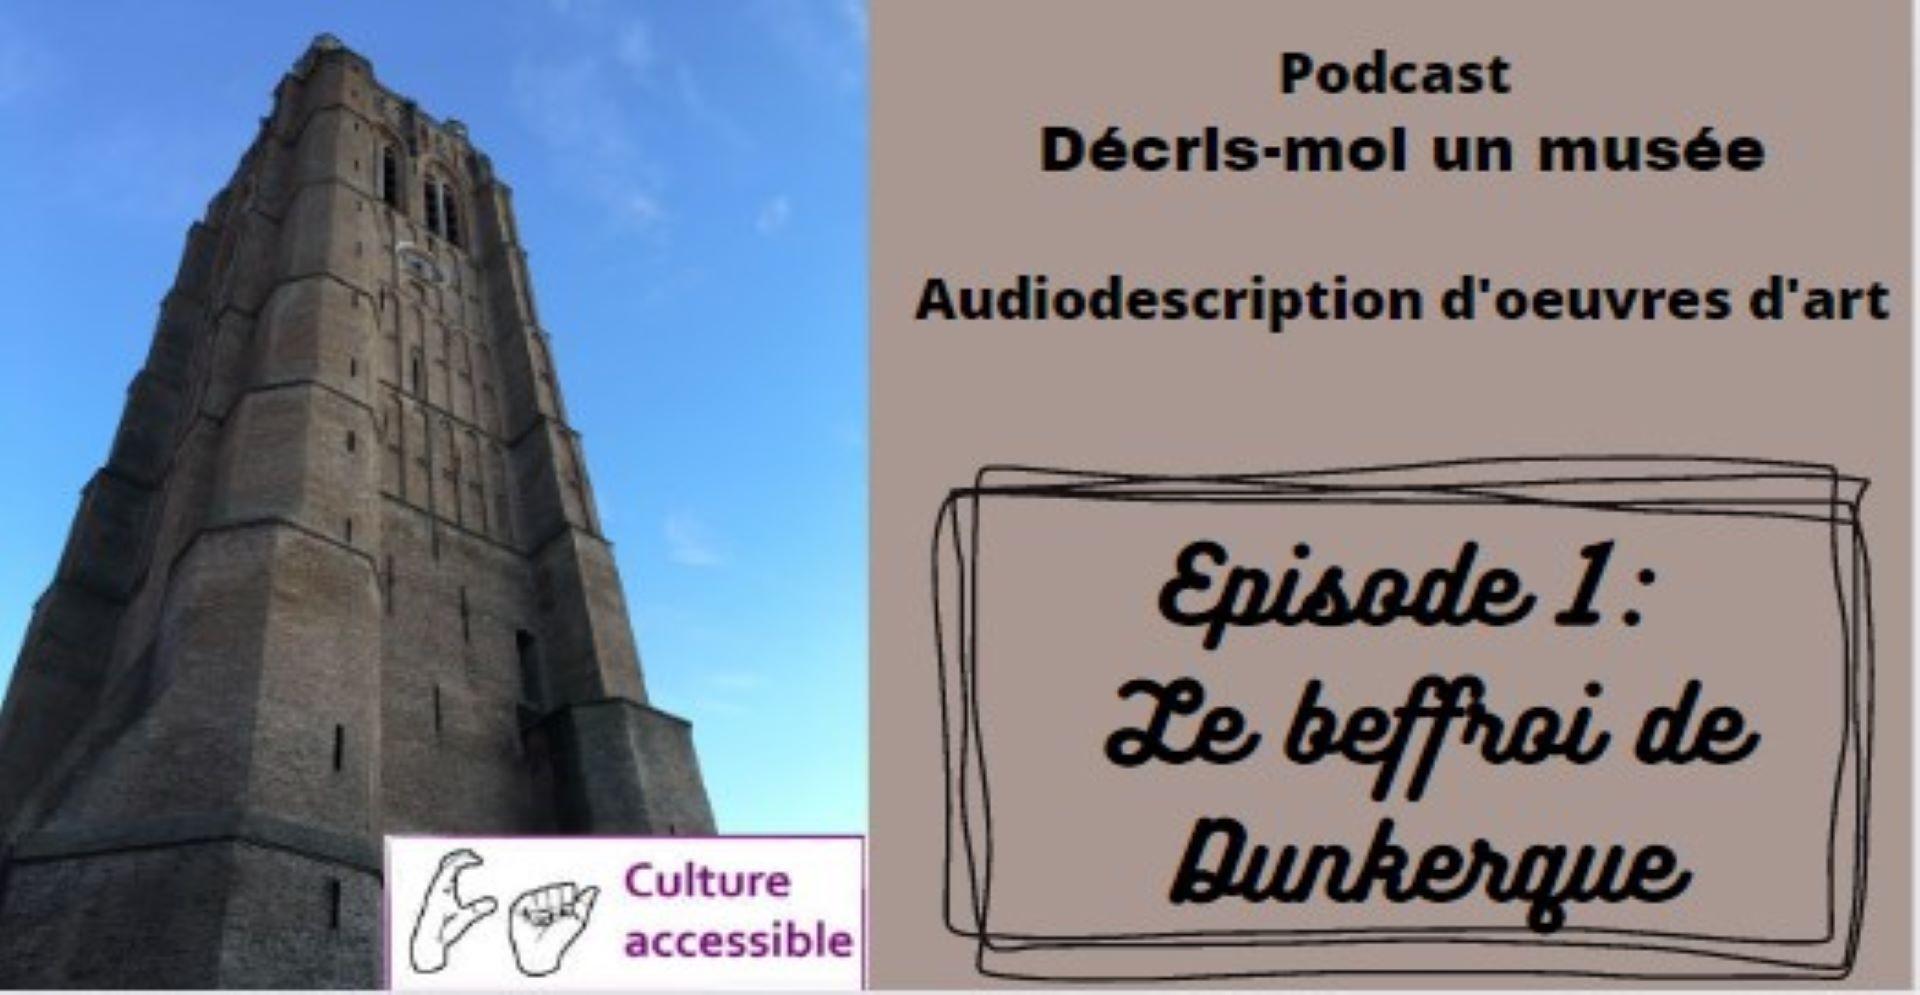 Podcast d'audiodescriptions 